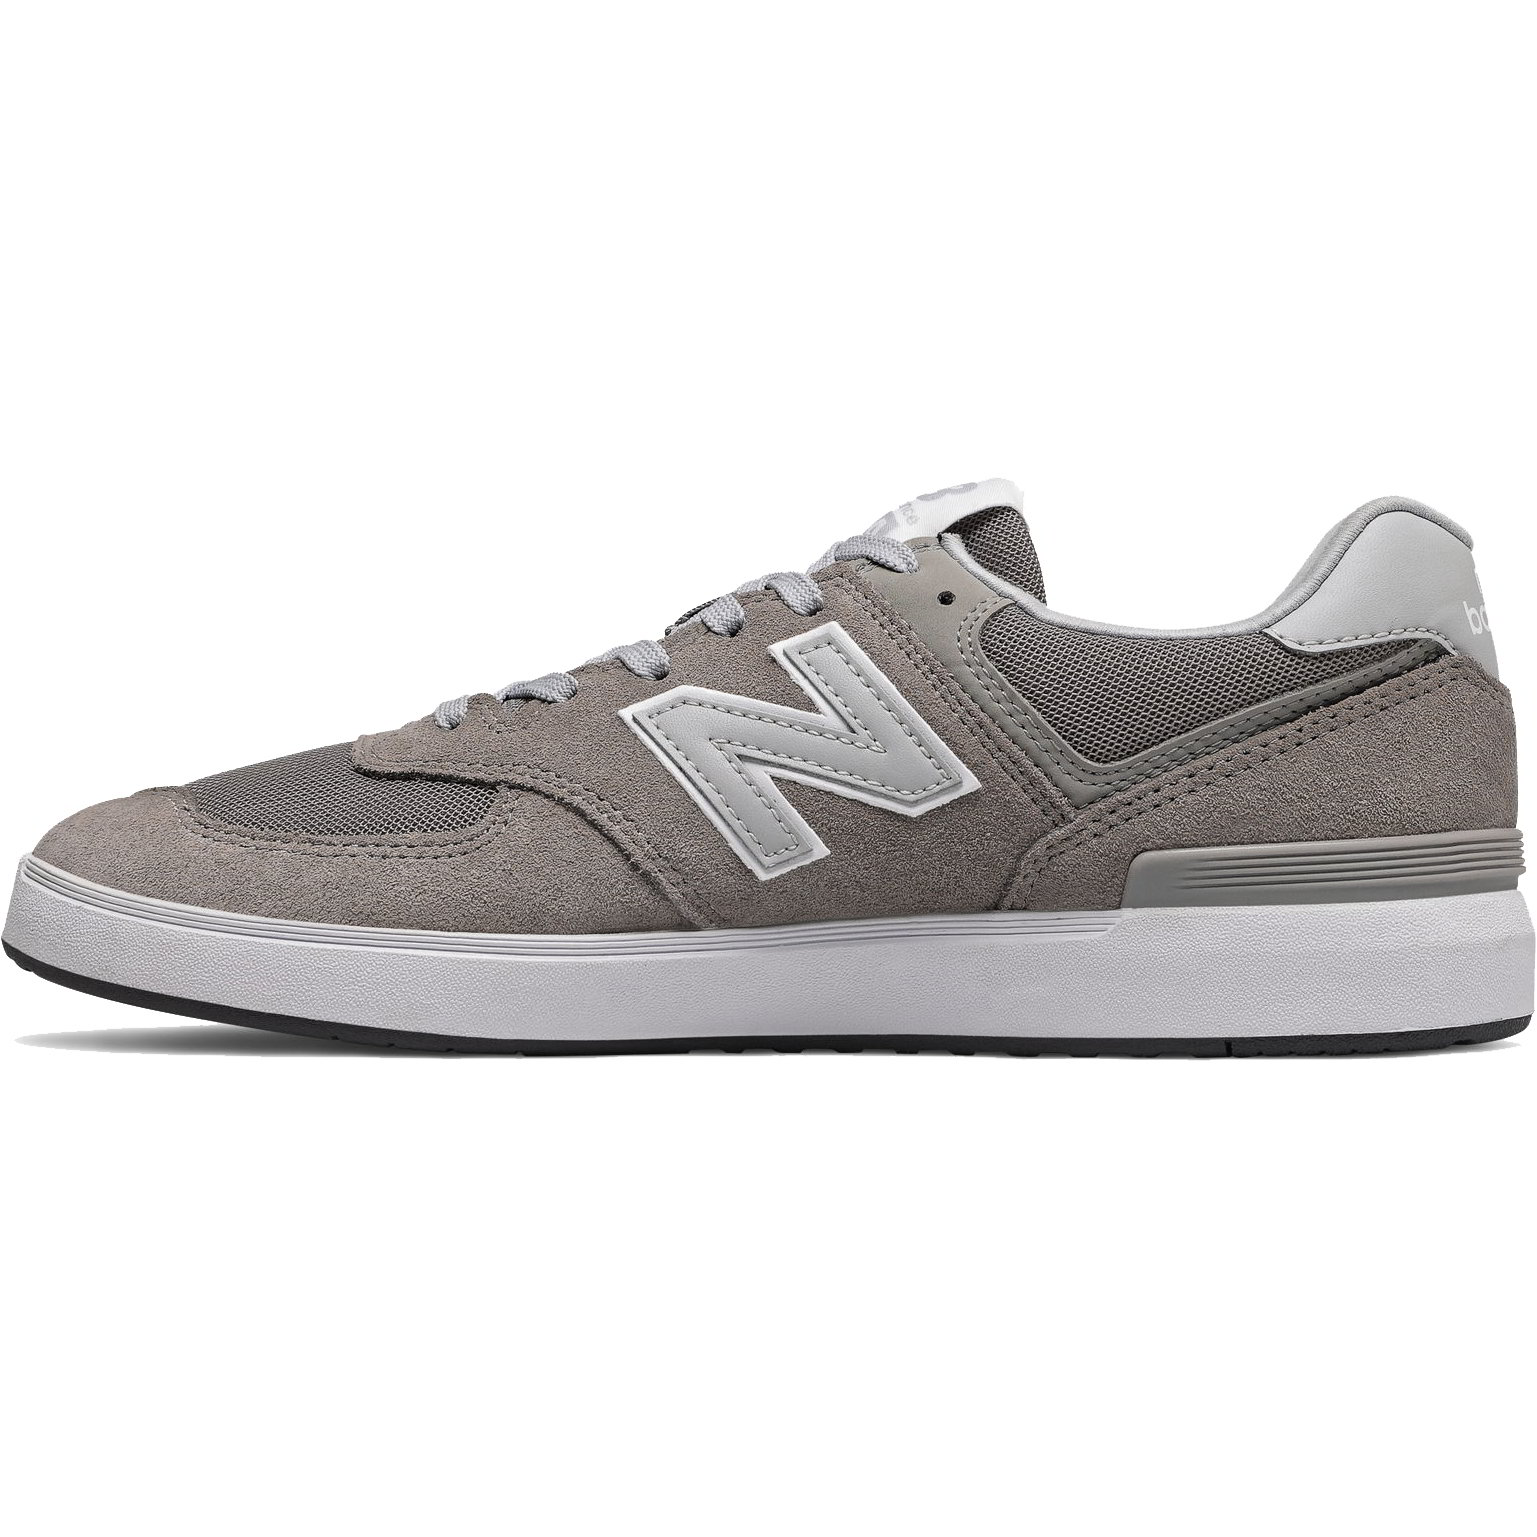 New Balance Mens AM 574 Skate Trainers - Grey 2951